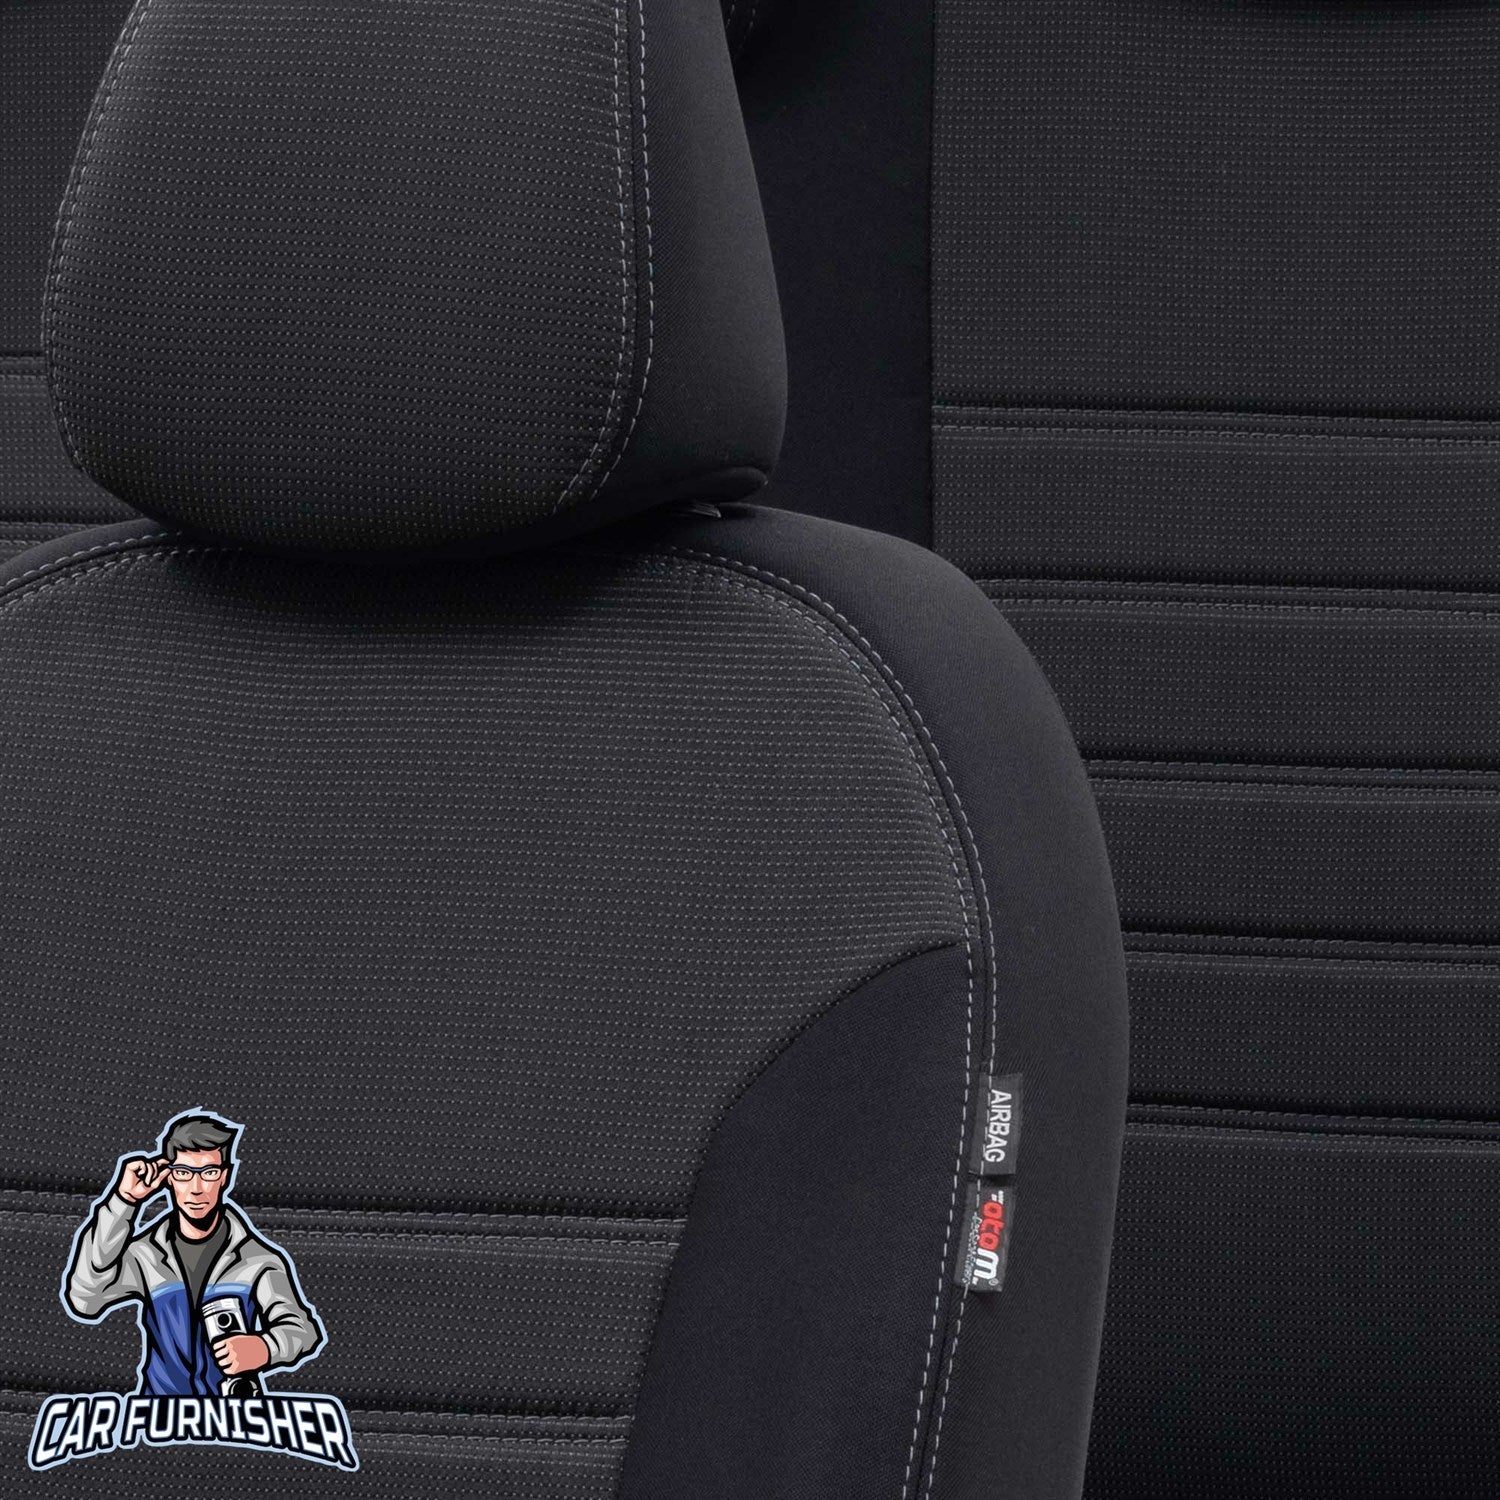 Fiat Fiorino Seat Covers Original Jacquard Design Dark Gray Jacquard Fabric